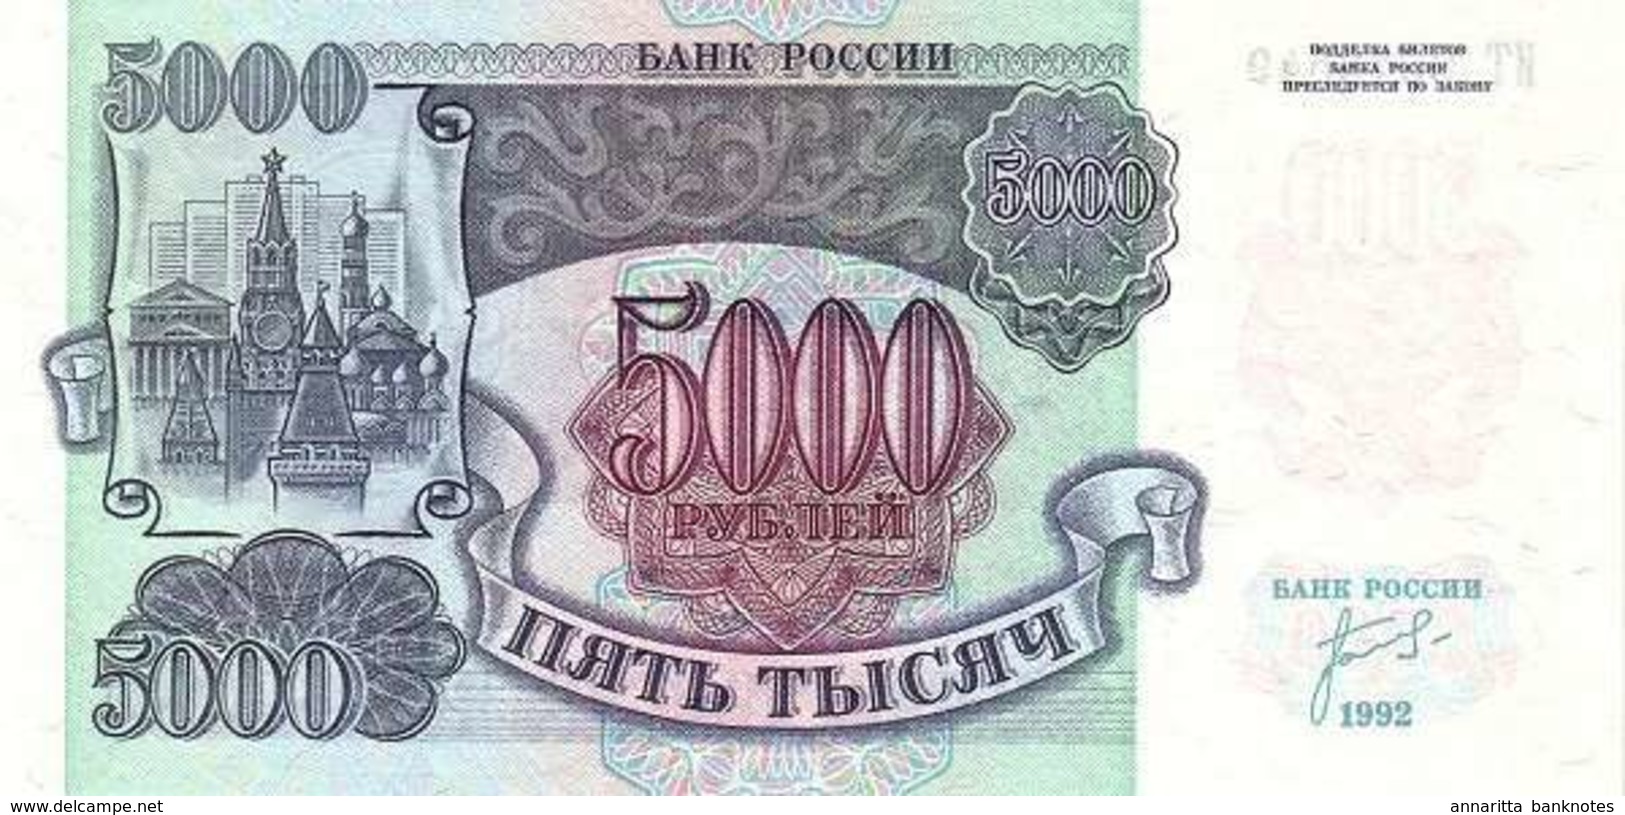 Russia (Россия) 5000 Pублей (Rubles) 1992, UNC, P-252a, RU801a - Rusland